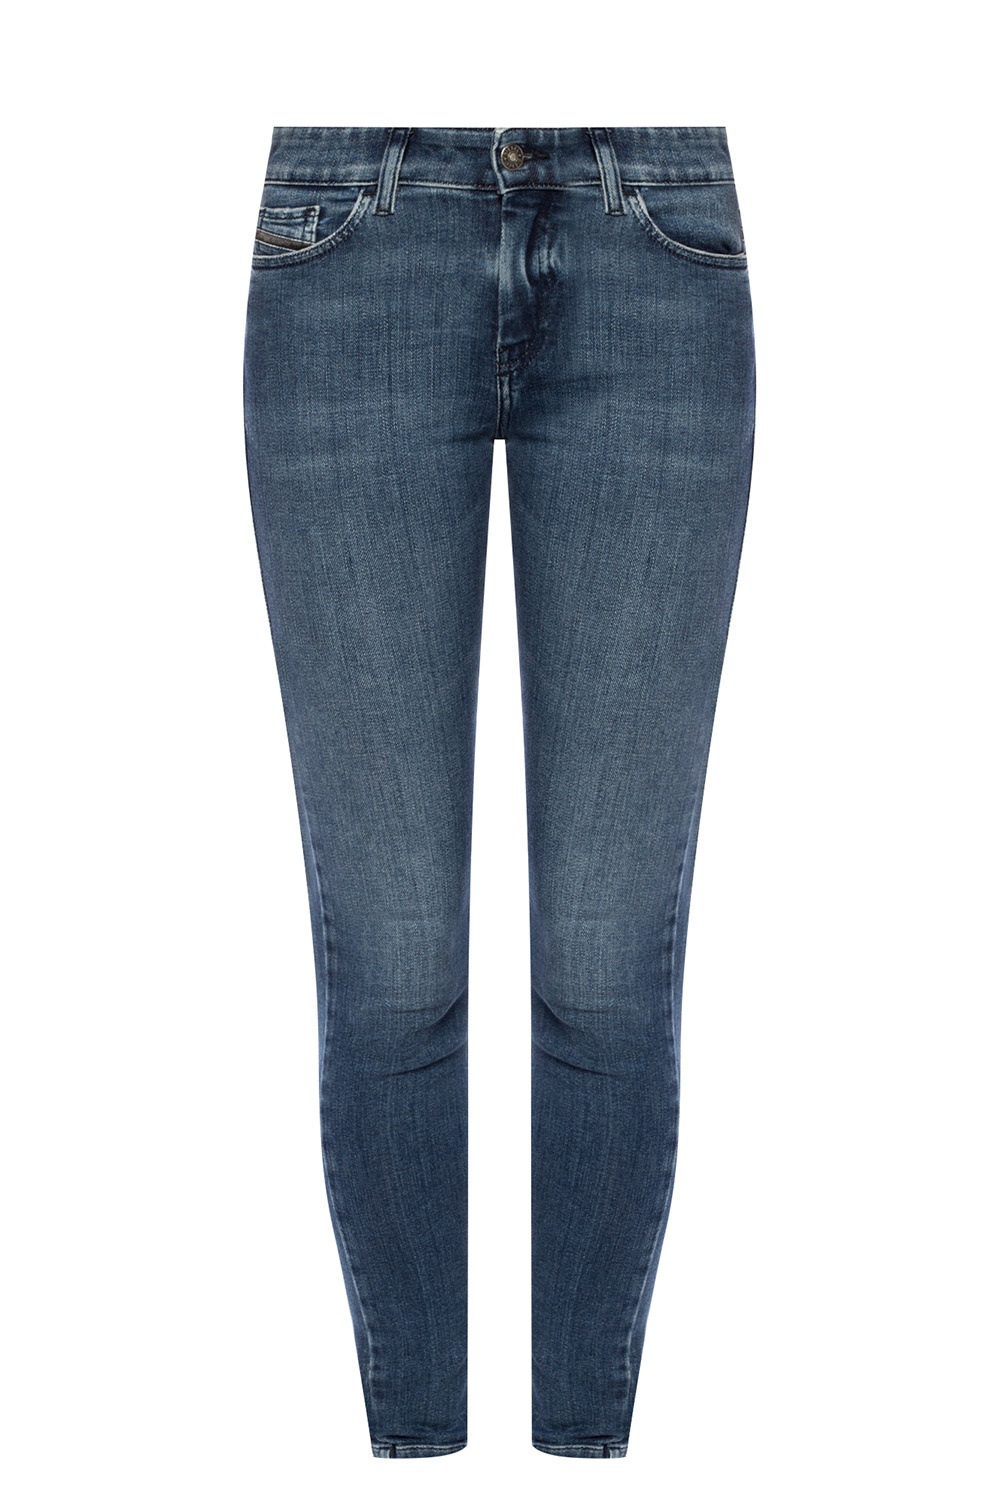 Diesel ‘Slandy’ jeans with logo | Women's Clothing | Vitkac